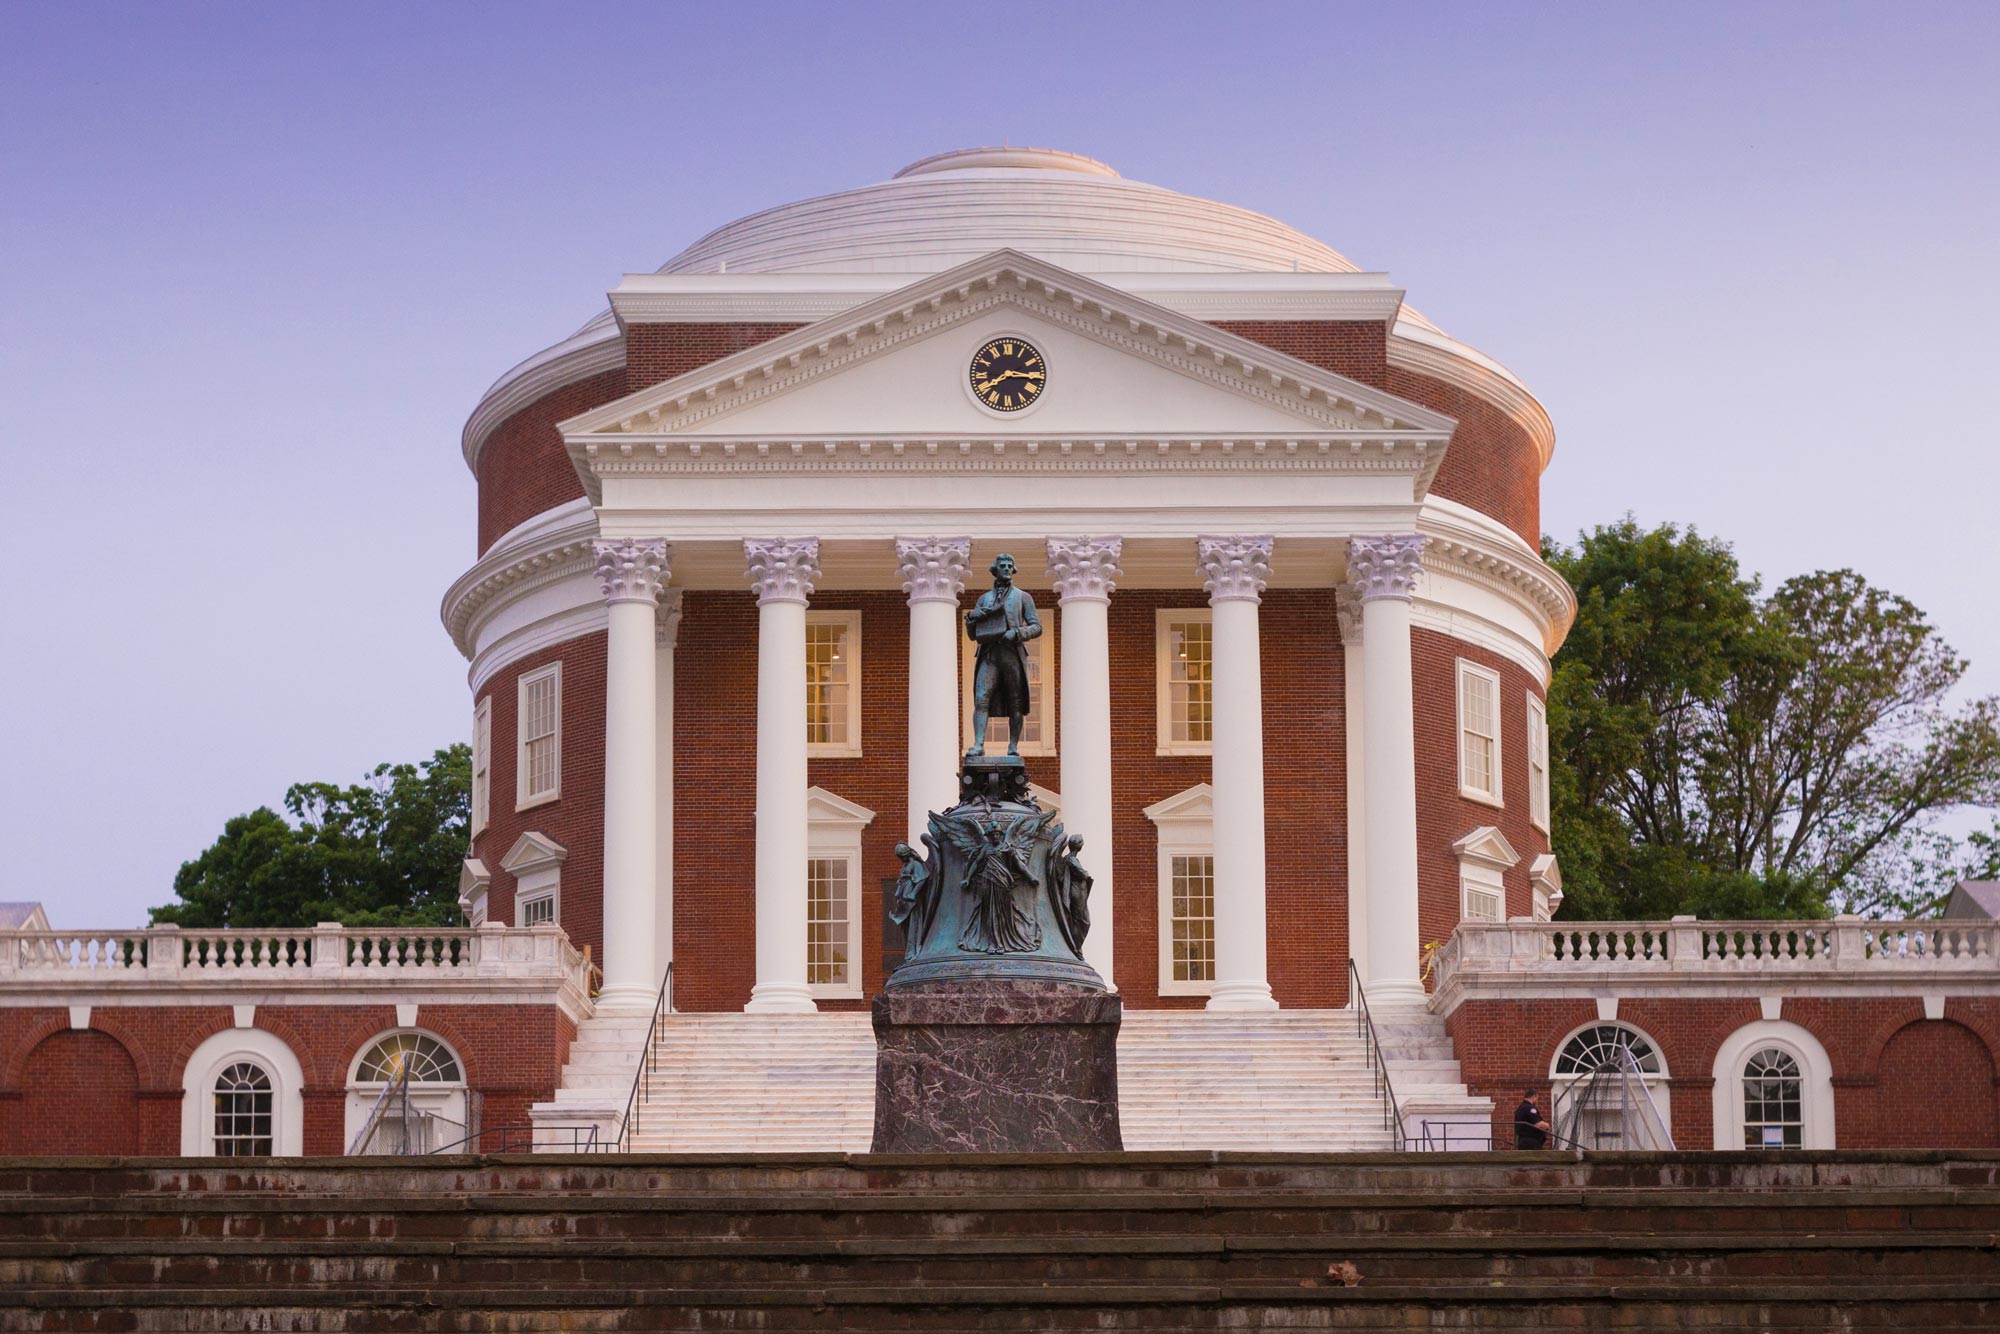 Rotunda with statue of Thomas Jefferson standing